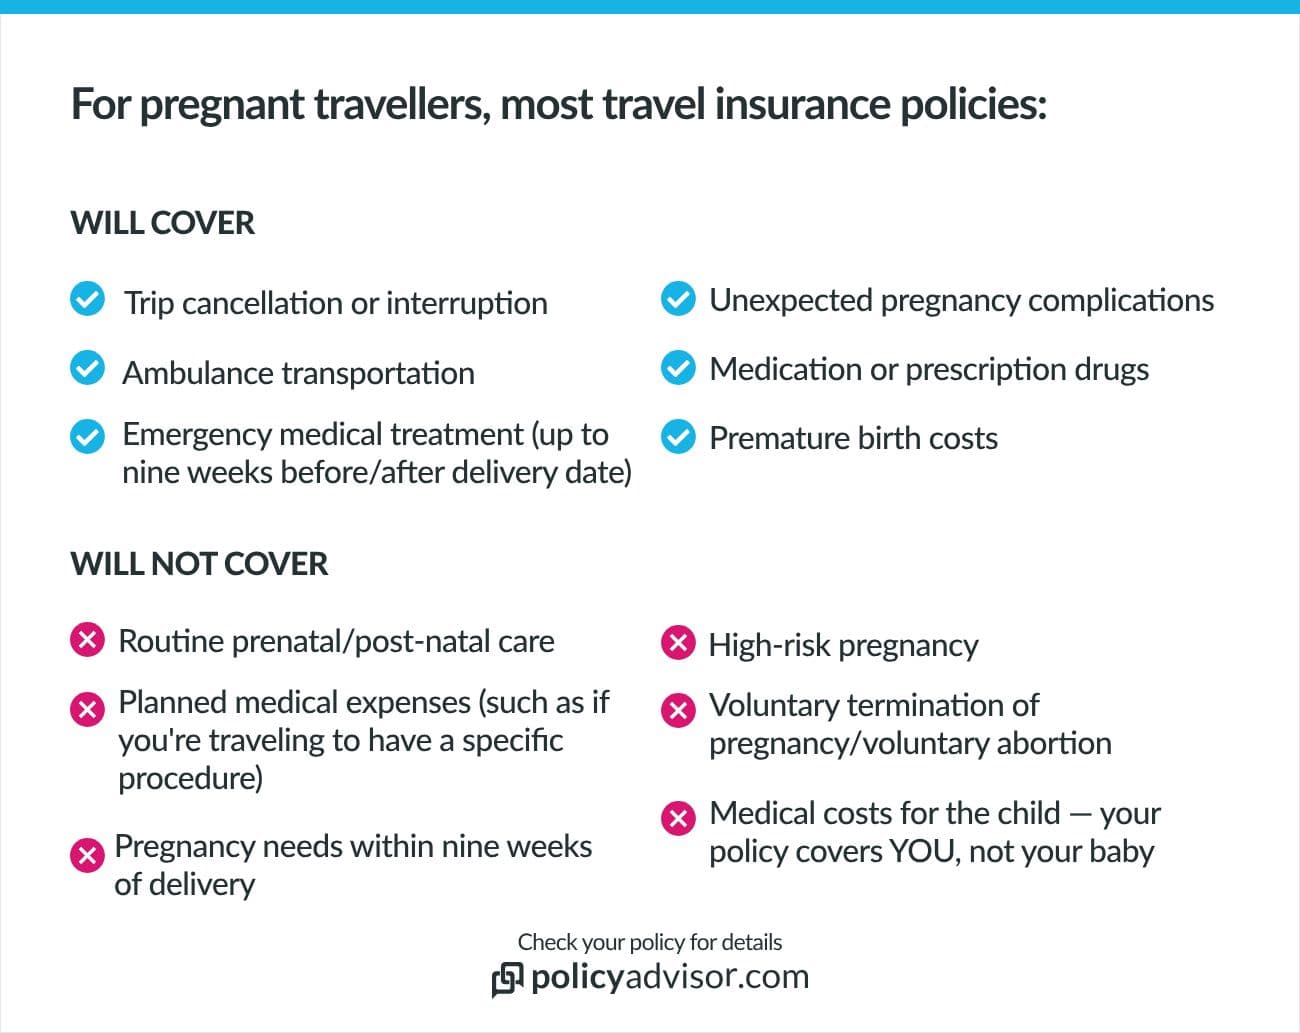 Does Travel Insurance Cover Pregnancy? - PolicyAdvisor